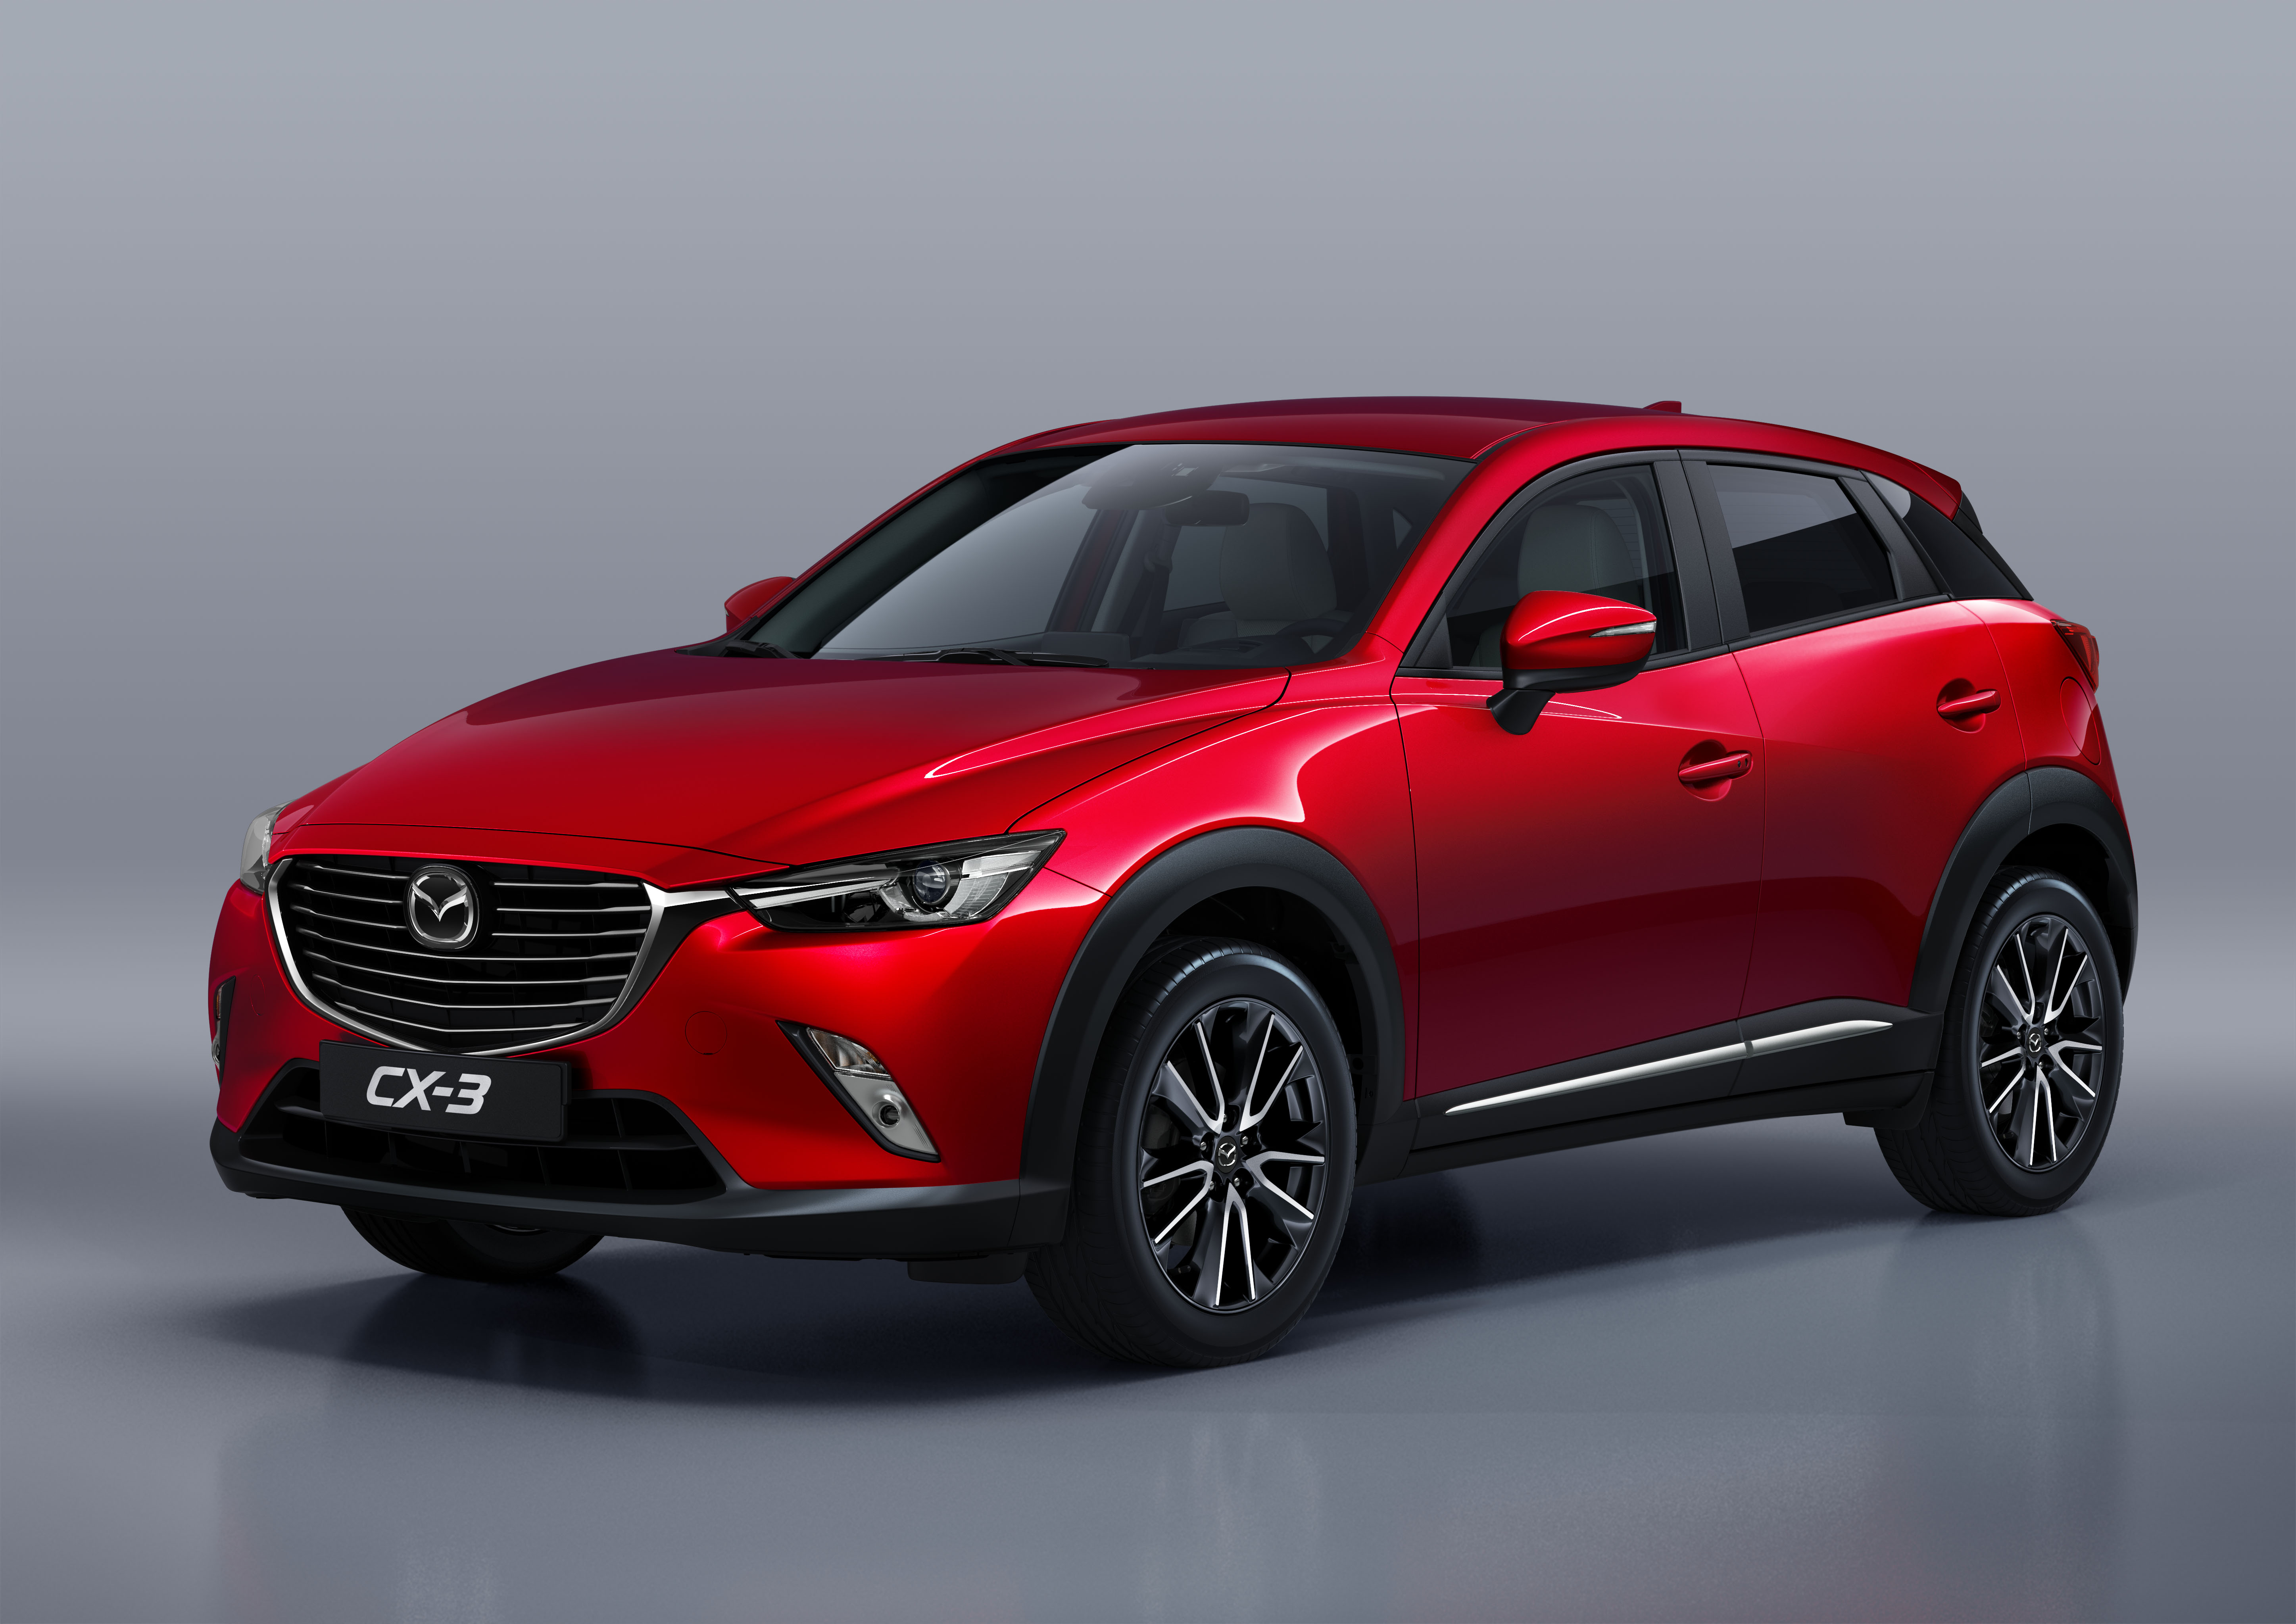 2018 Mazda CX3 509165 Best quality free high